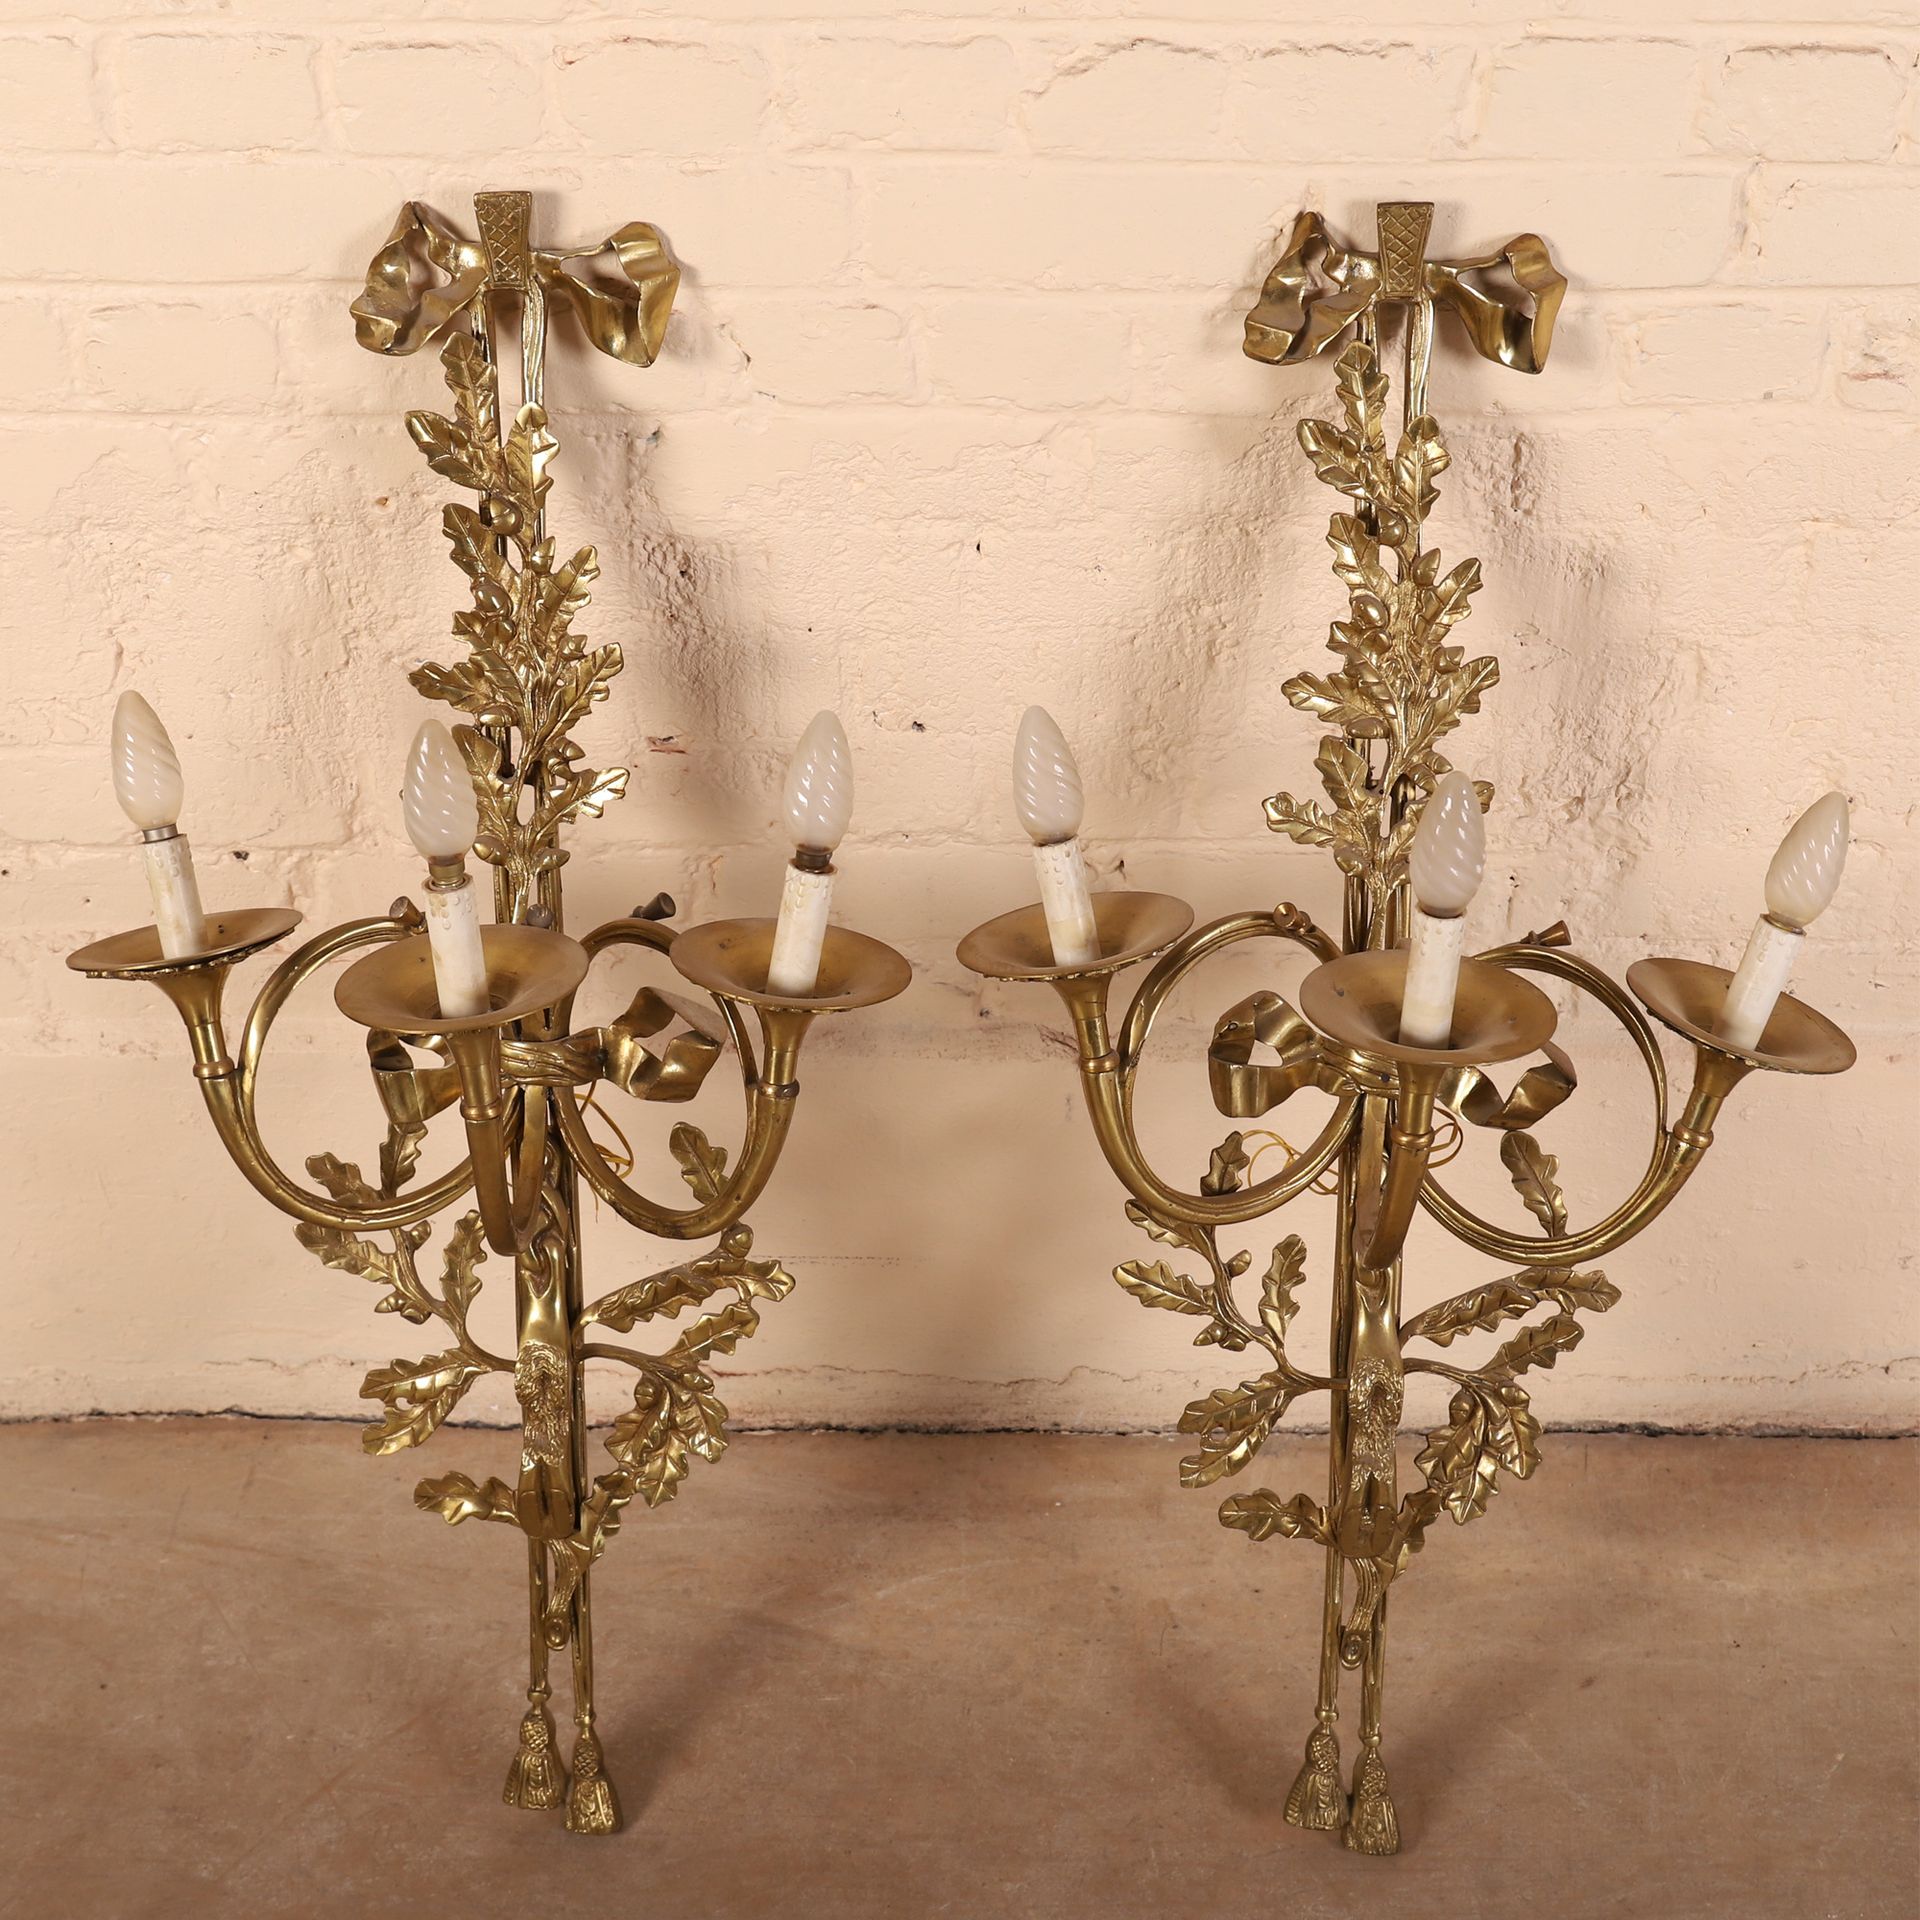 Null 一对金黄色的铜灯 20世纪

狩猎角形状的三个灯臂，橡树叶和鹿腿装饰

高：92厘米

宽：43厘米